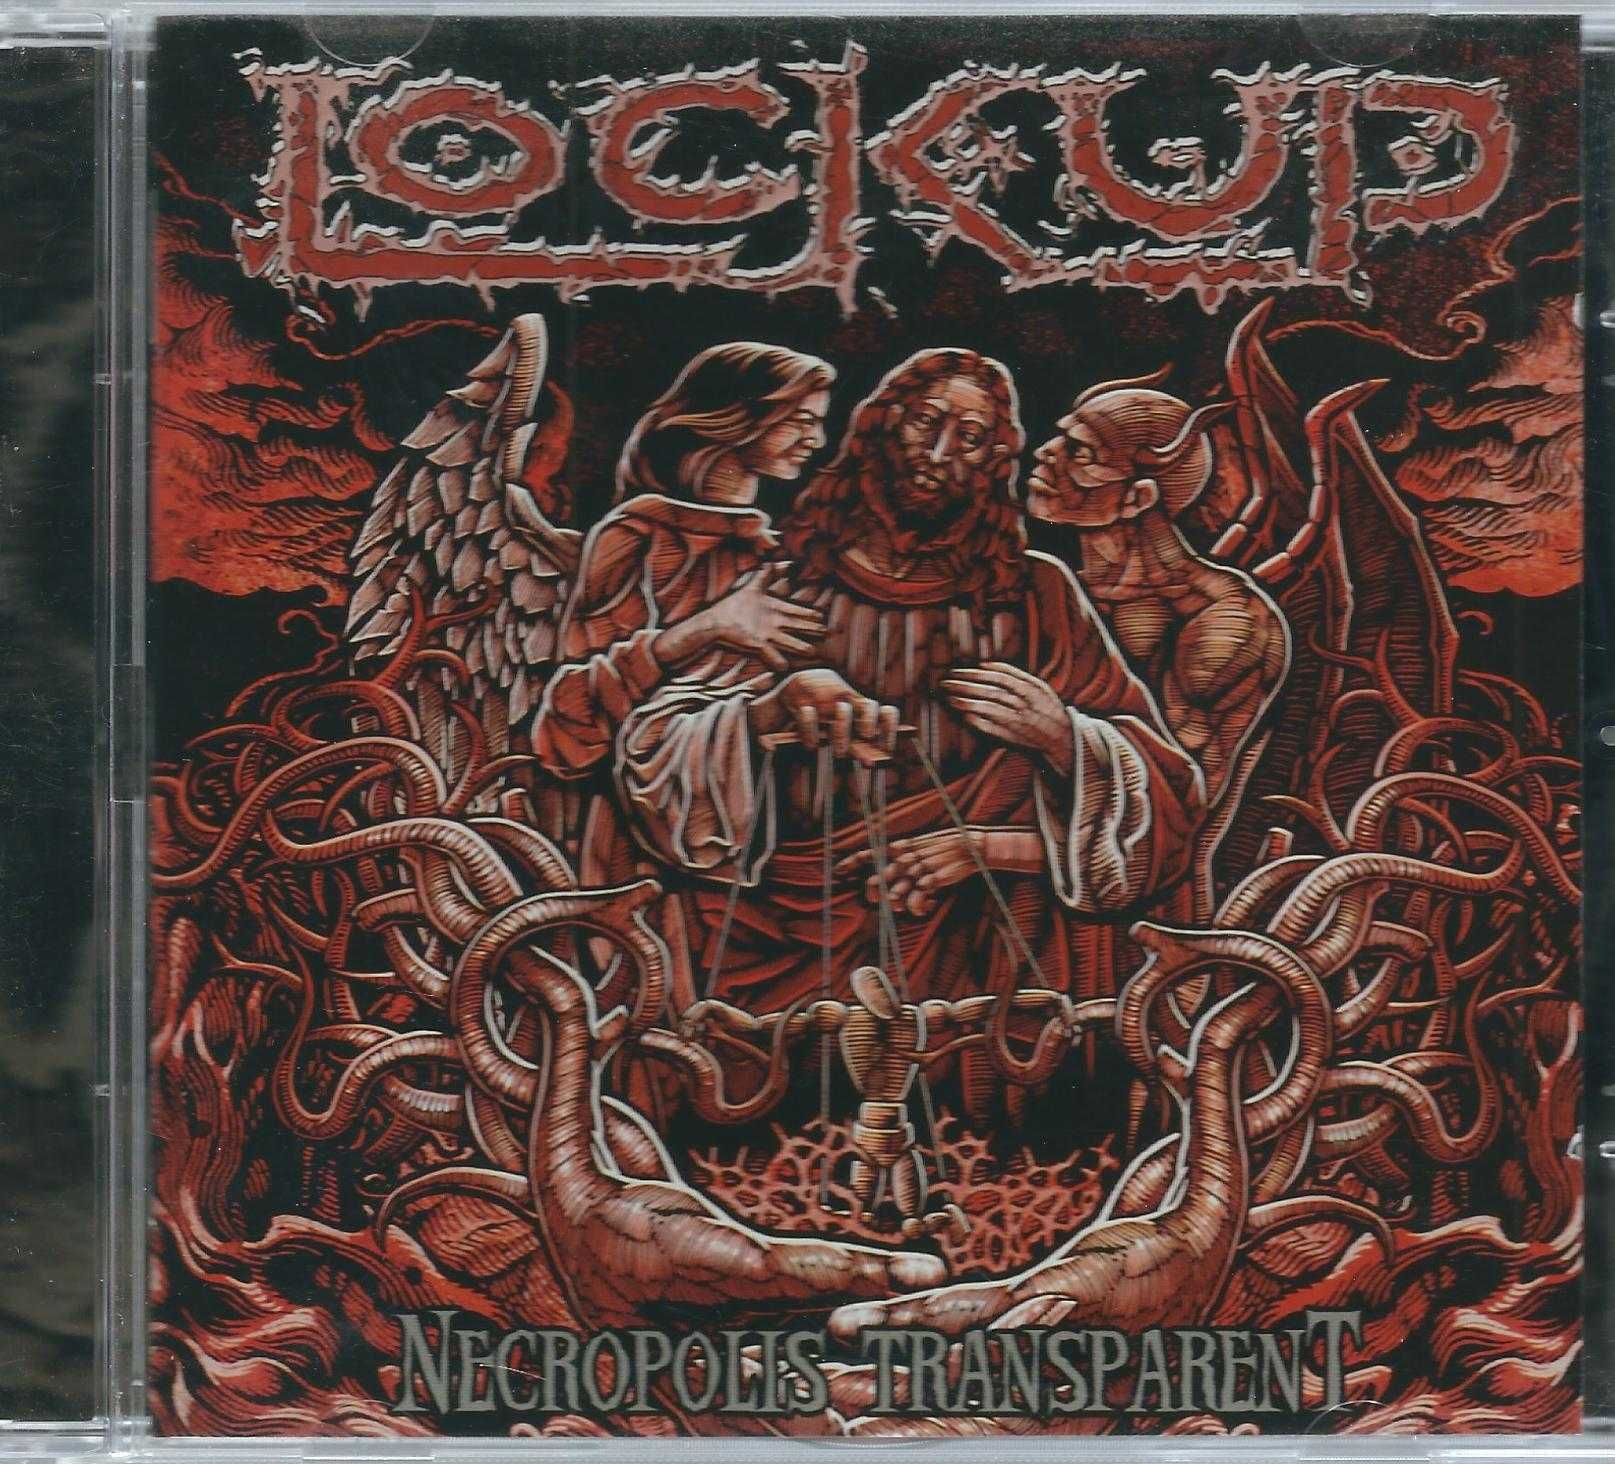 CD Lock Up - Necropolis Transparent (2011) (Nuclear Blast)